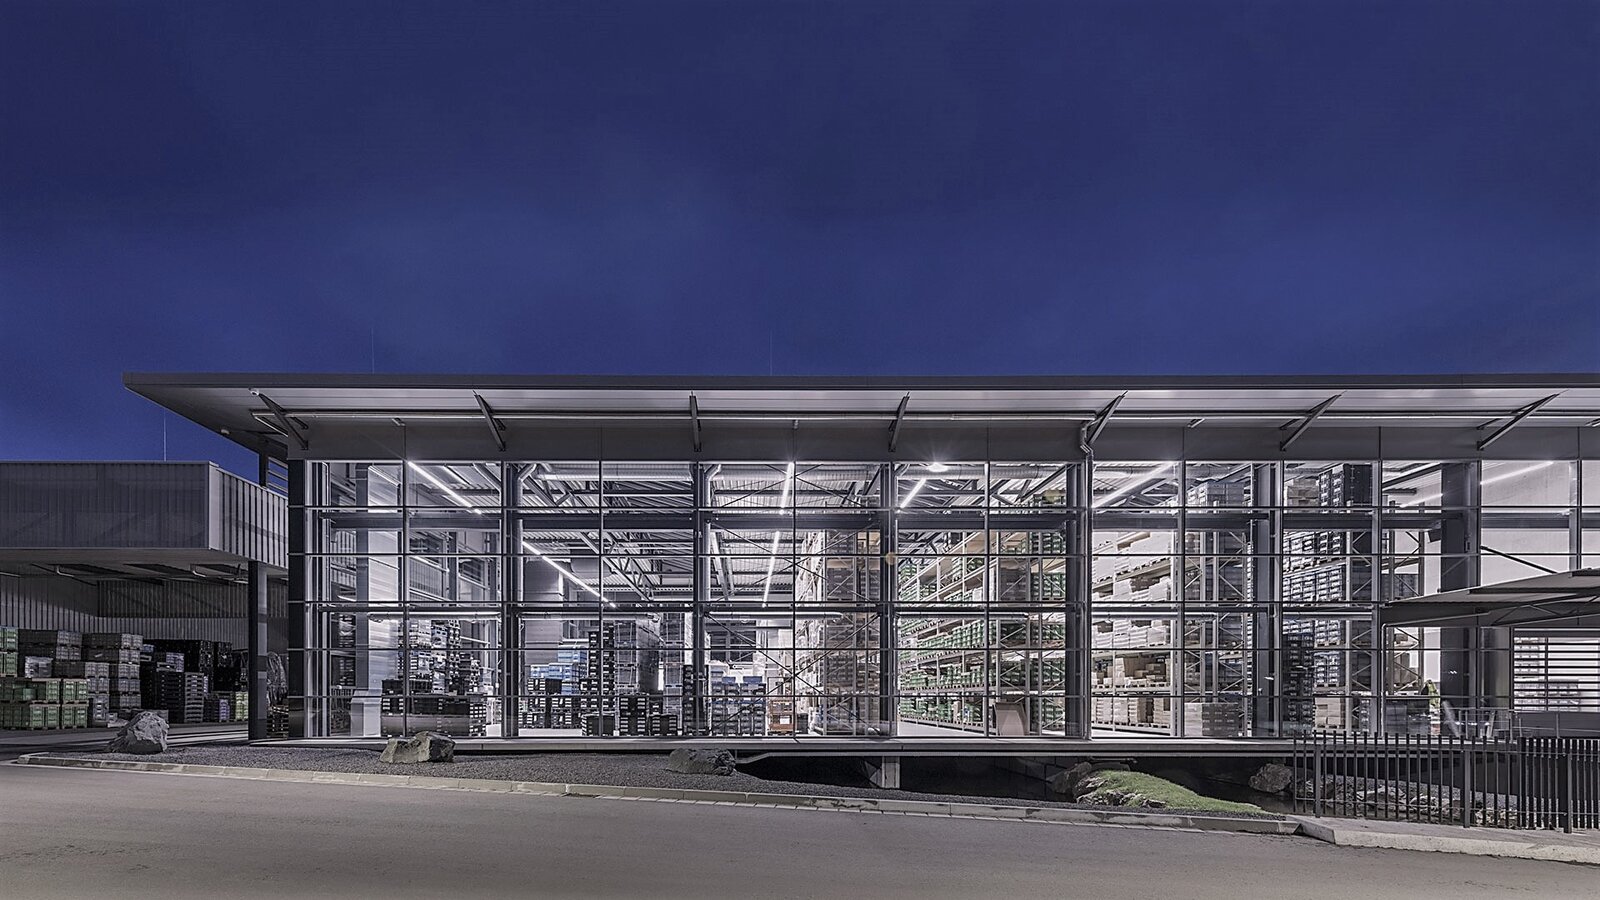 <strong>Unsere Leistungen:</strong> <br>Fertigungshalle in Stahlskelettbauweise mit Pfosten-Riegel-Fassade in Aluminiumausführung